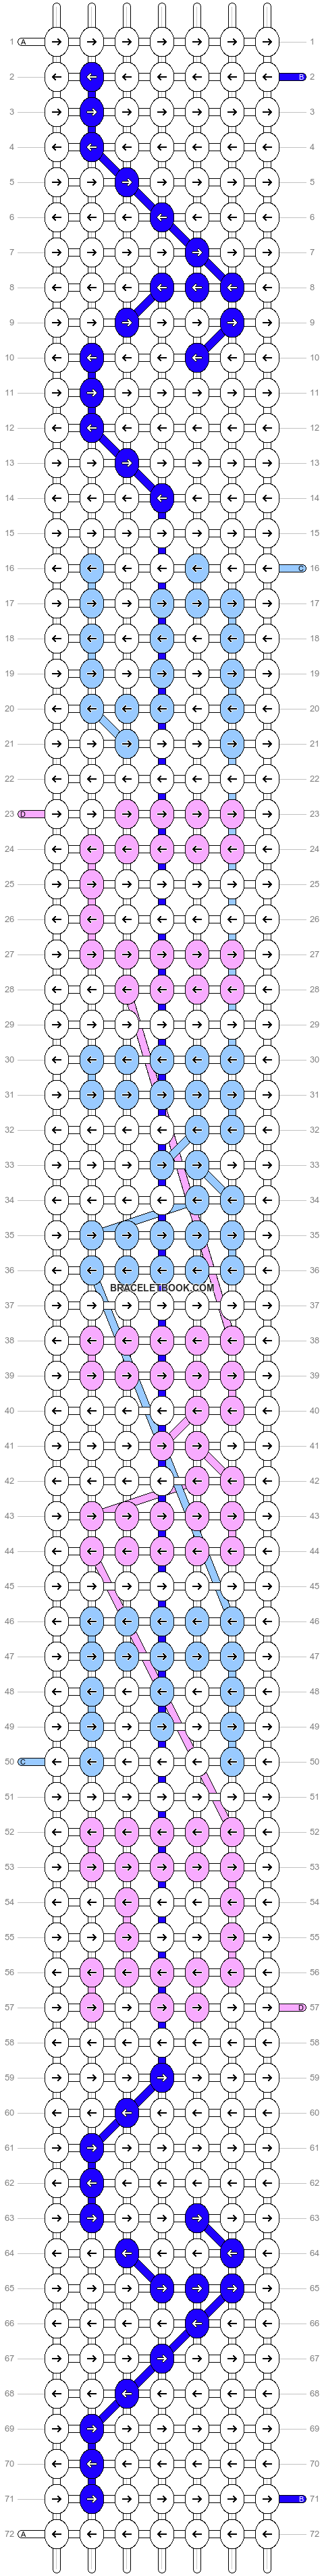 Alpha pattern #51088 variation #81593 pattern